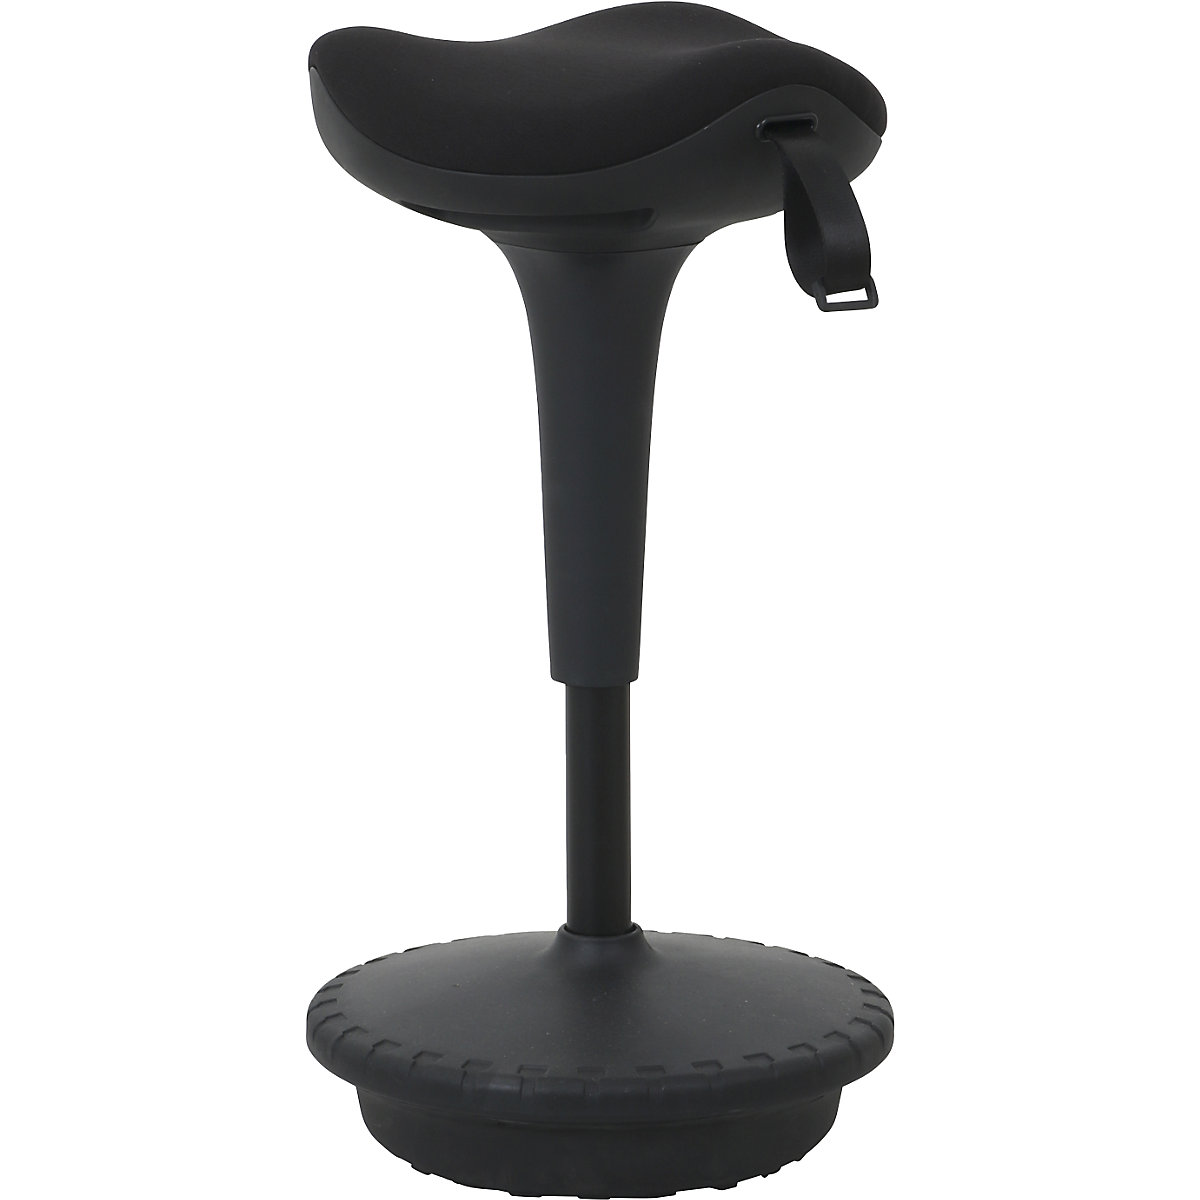 Anti-fatigue stool 6156 – Twinco, triangular seat 325 mm, black cover